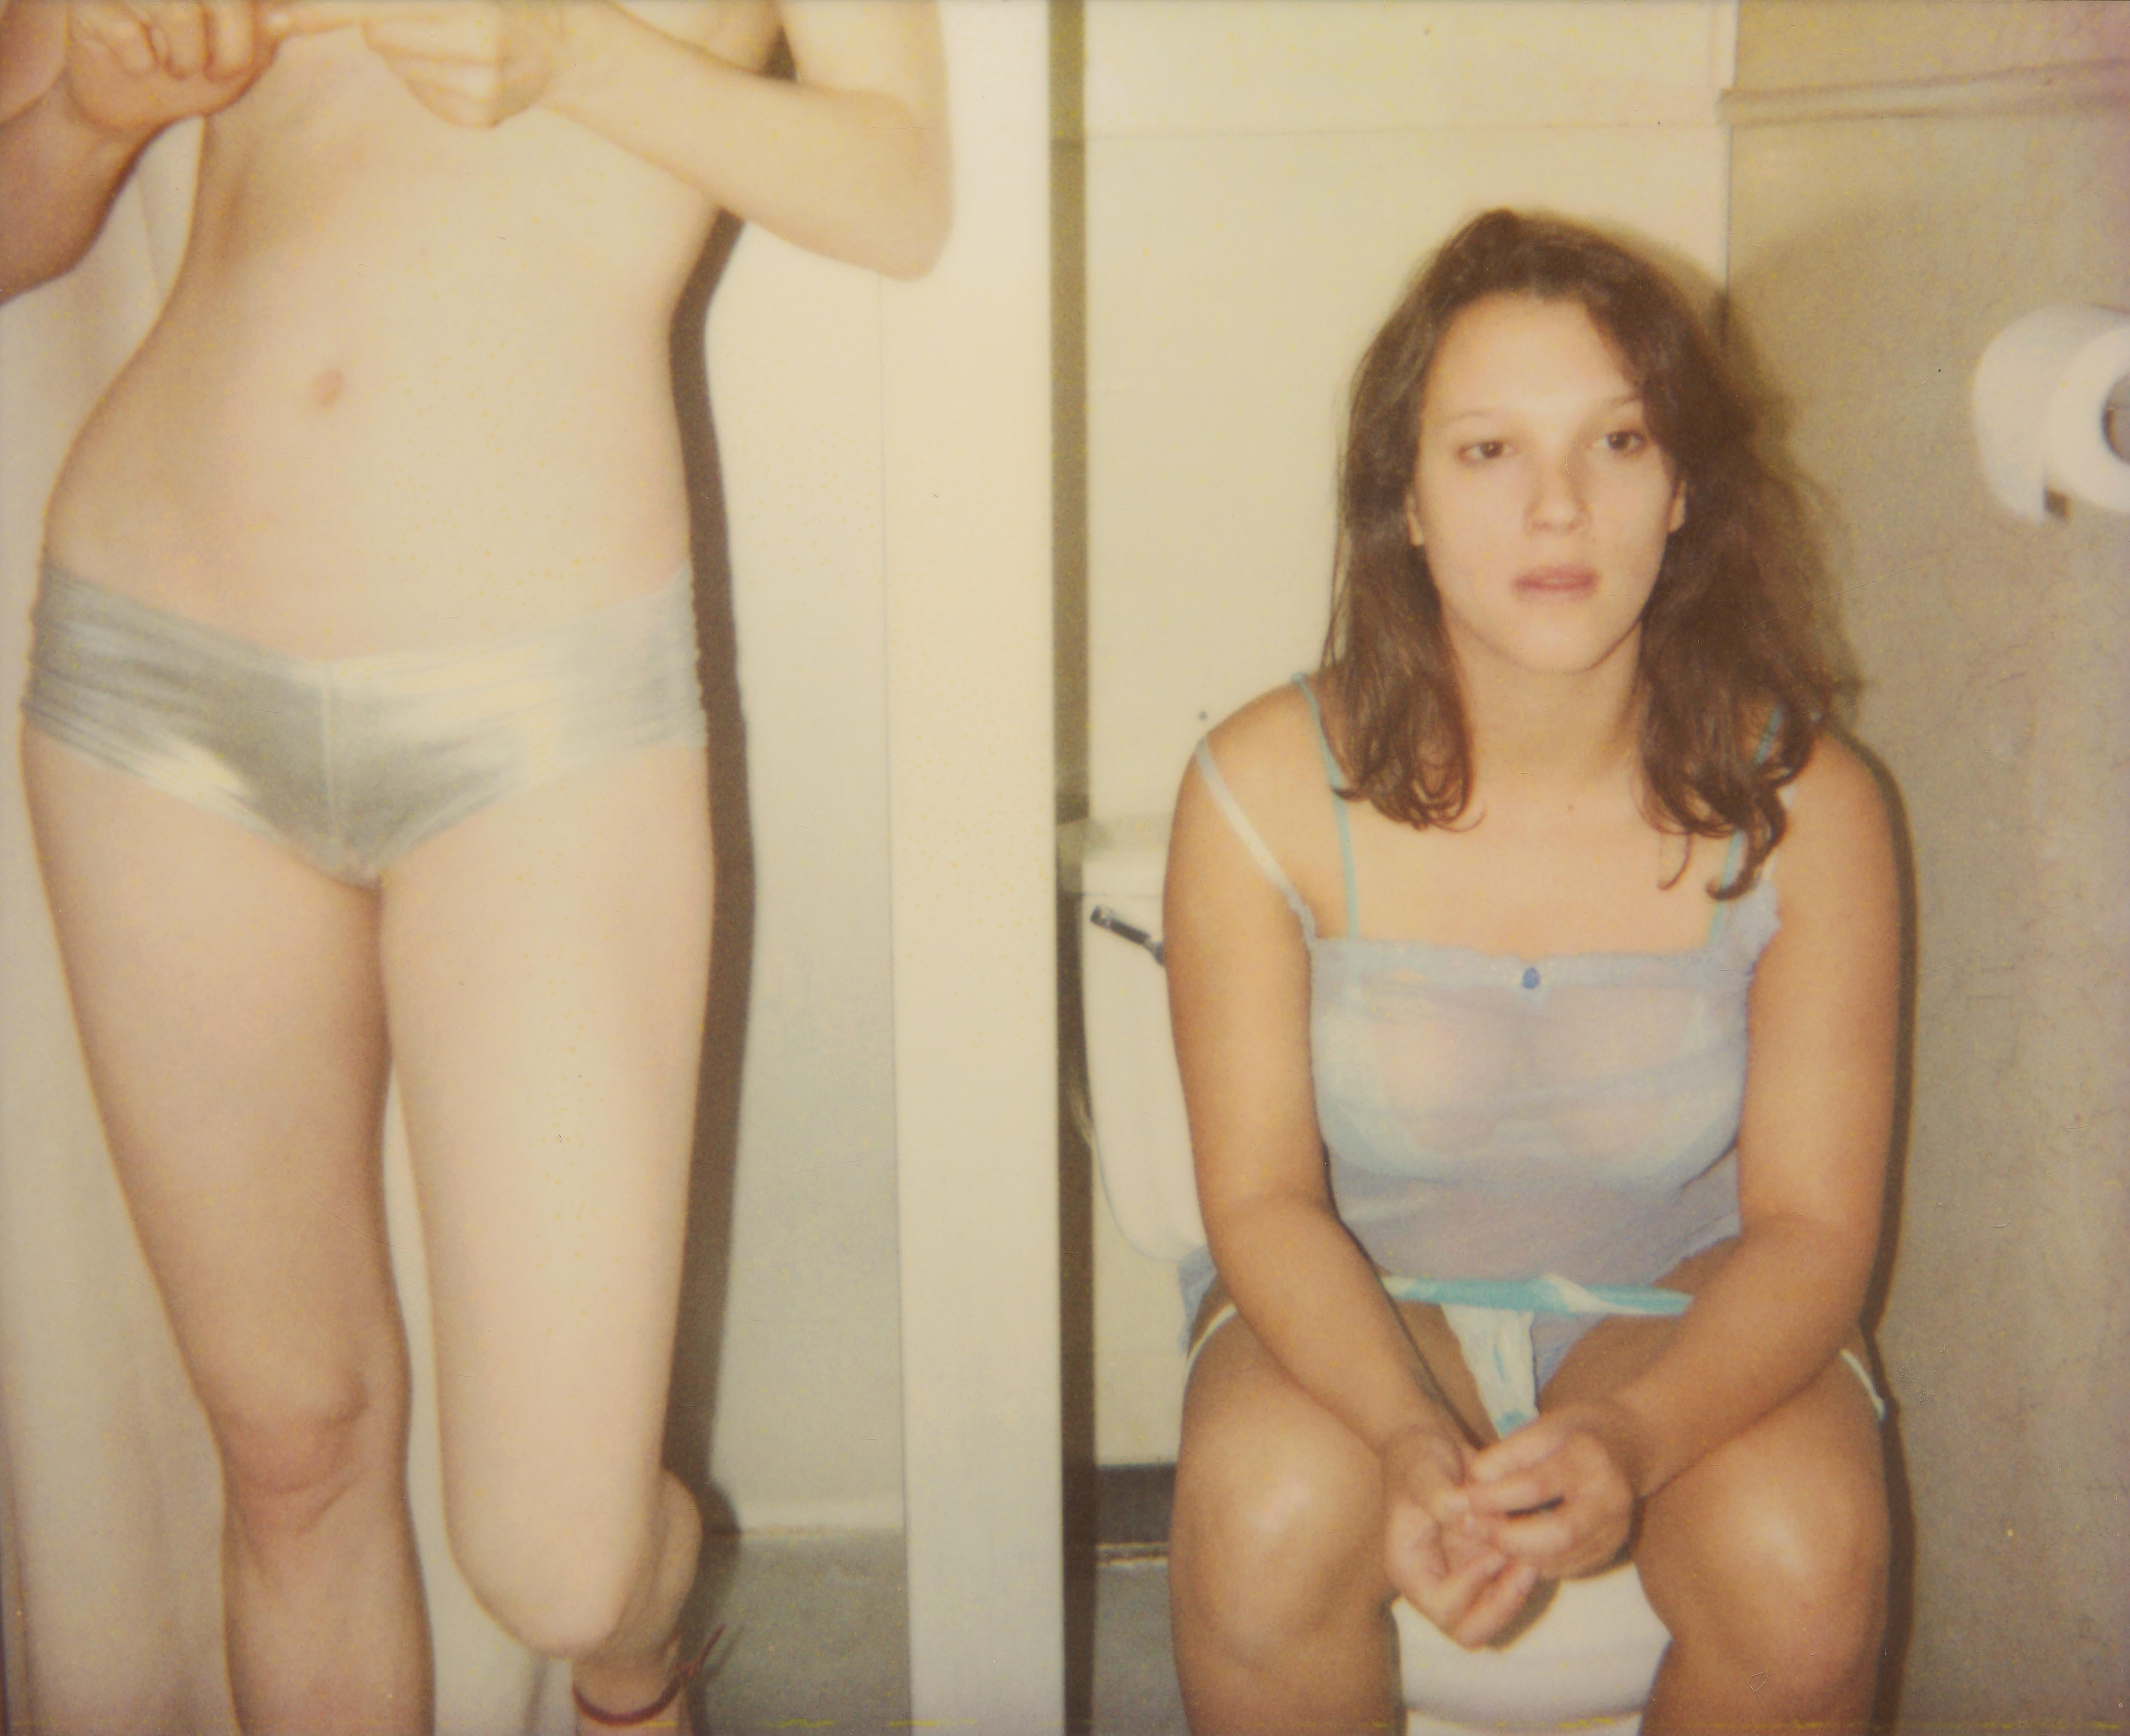 Stefanie Schneider Color Photograph - Taking Turns (Till Death Do Us Part) - 21st Century, Polaroid, Nude Photography